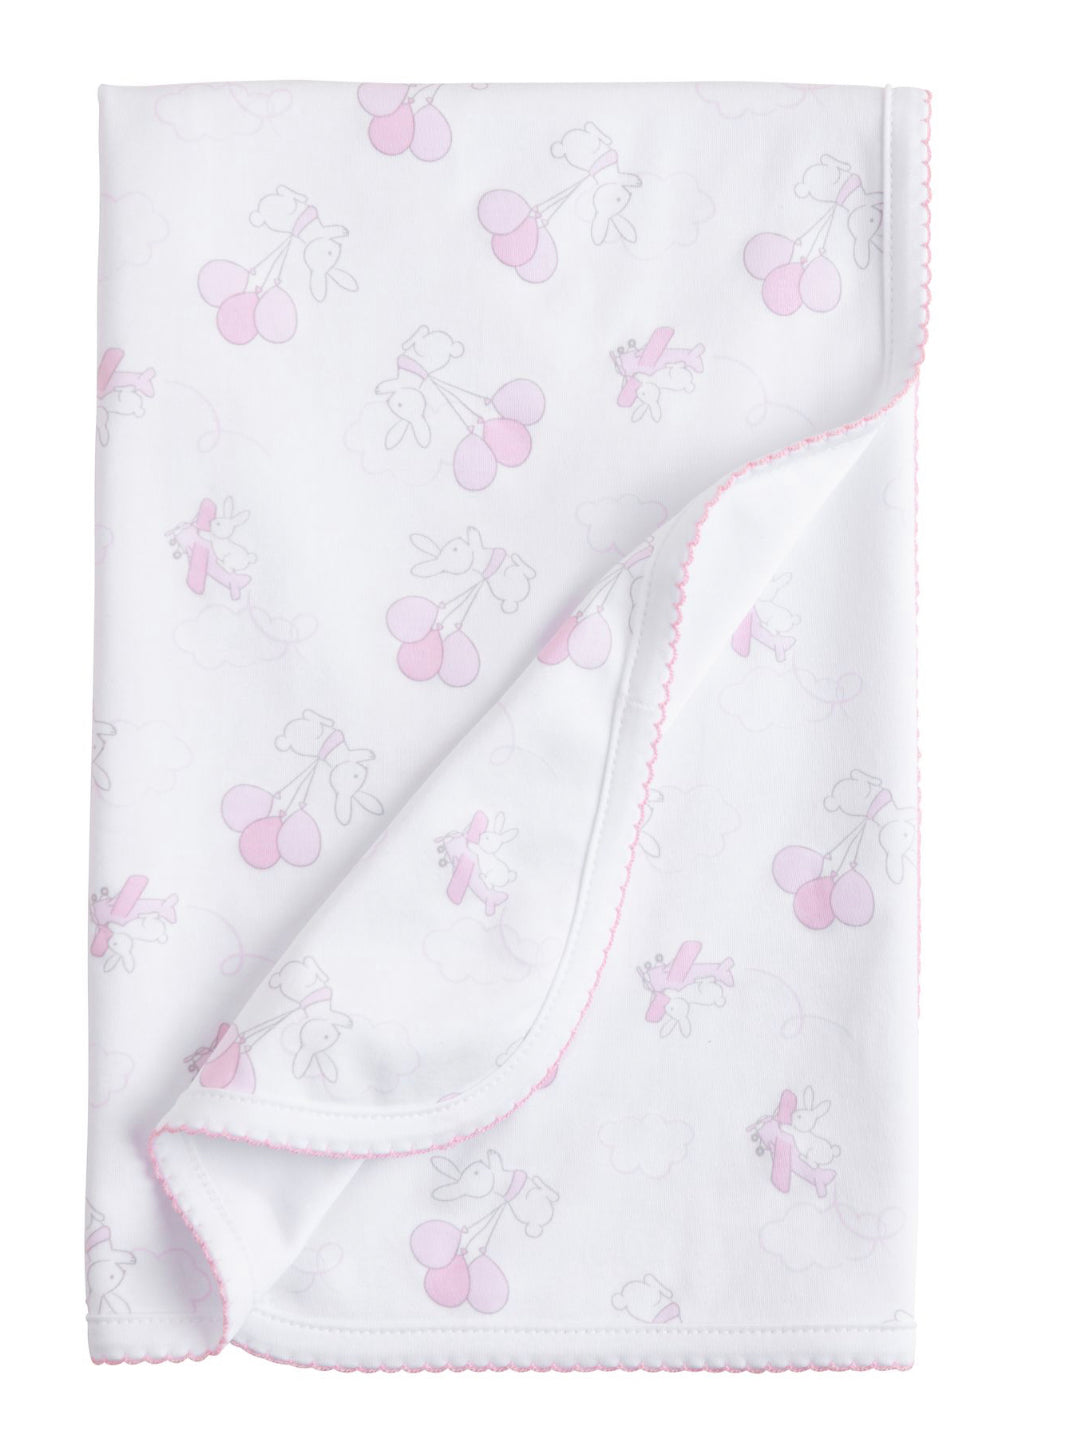 Printed blanket- pink flying bunny